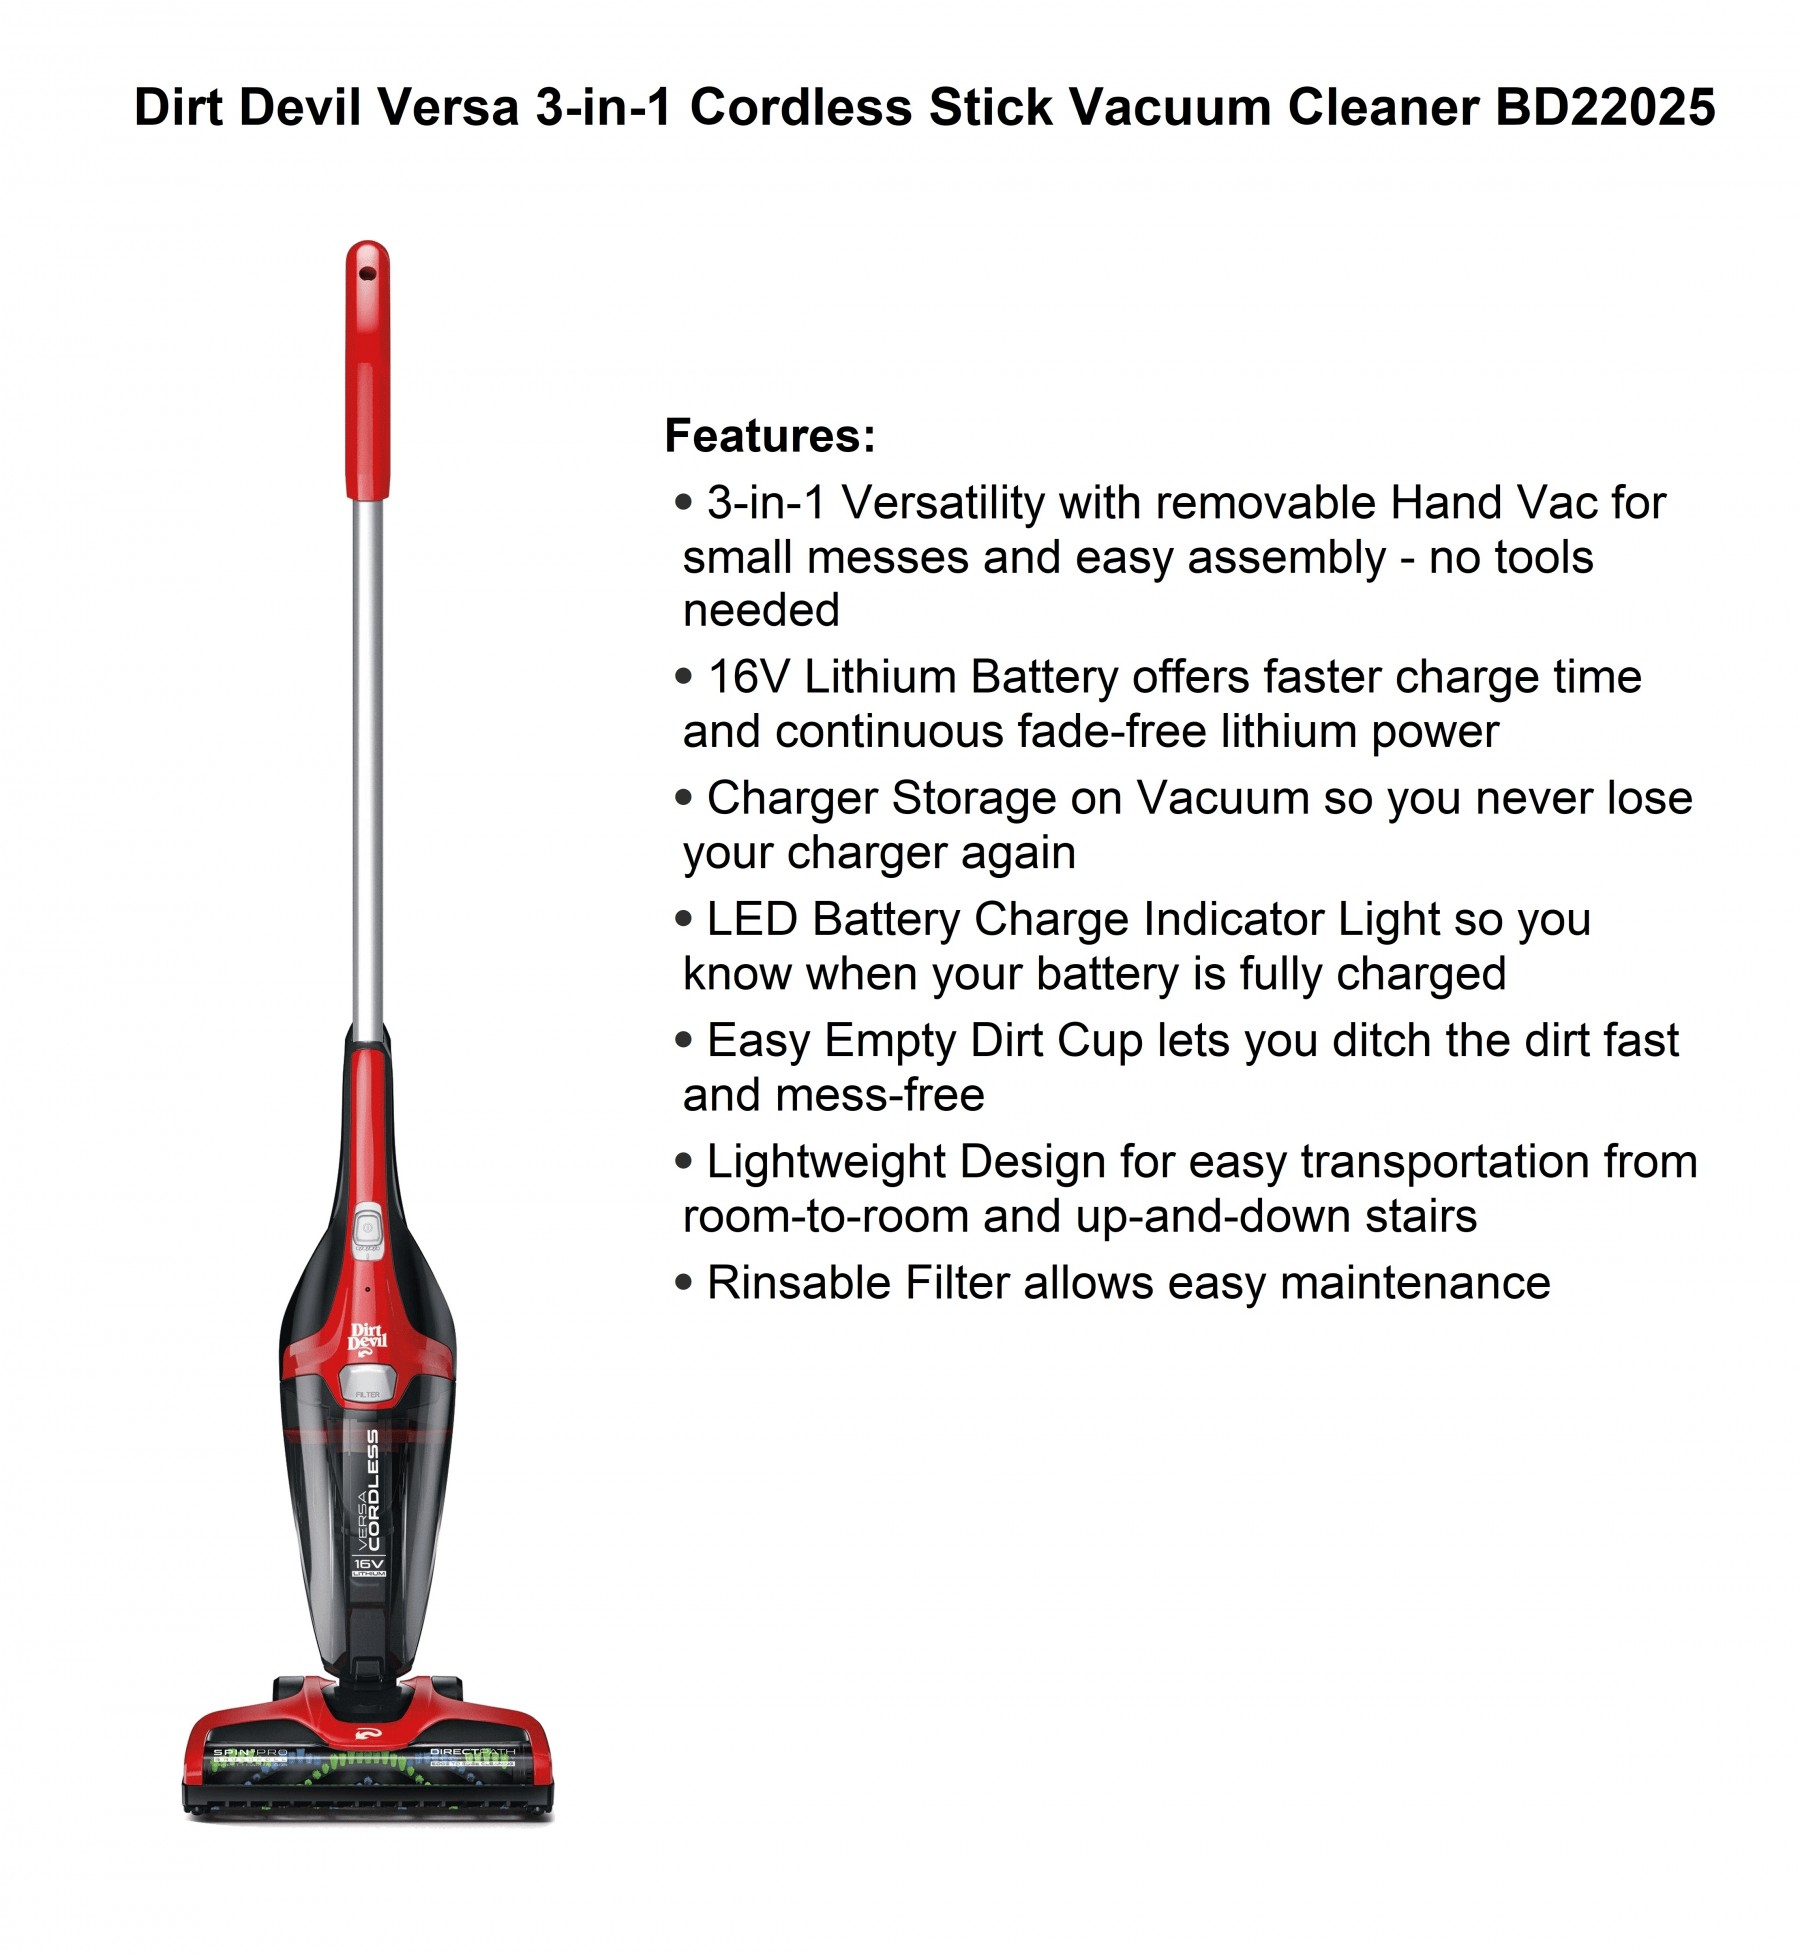 Dirt Devil Versa 3 in 1 Cordless Stick Vacuum BD22025 from Dirt